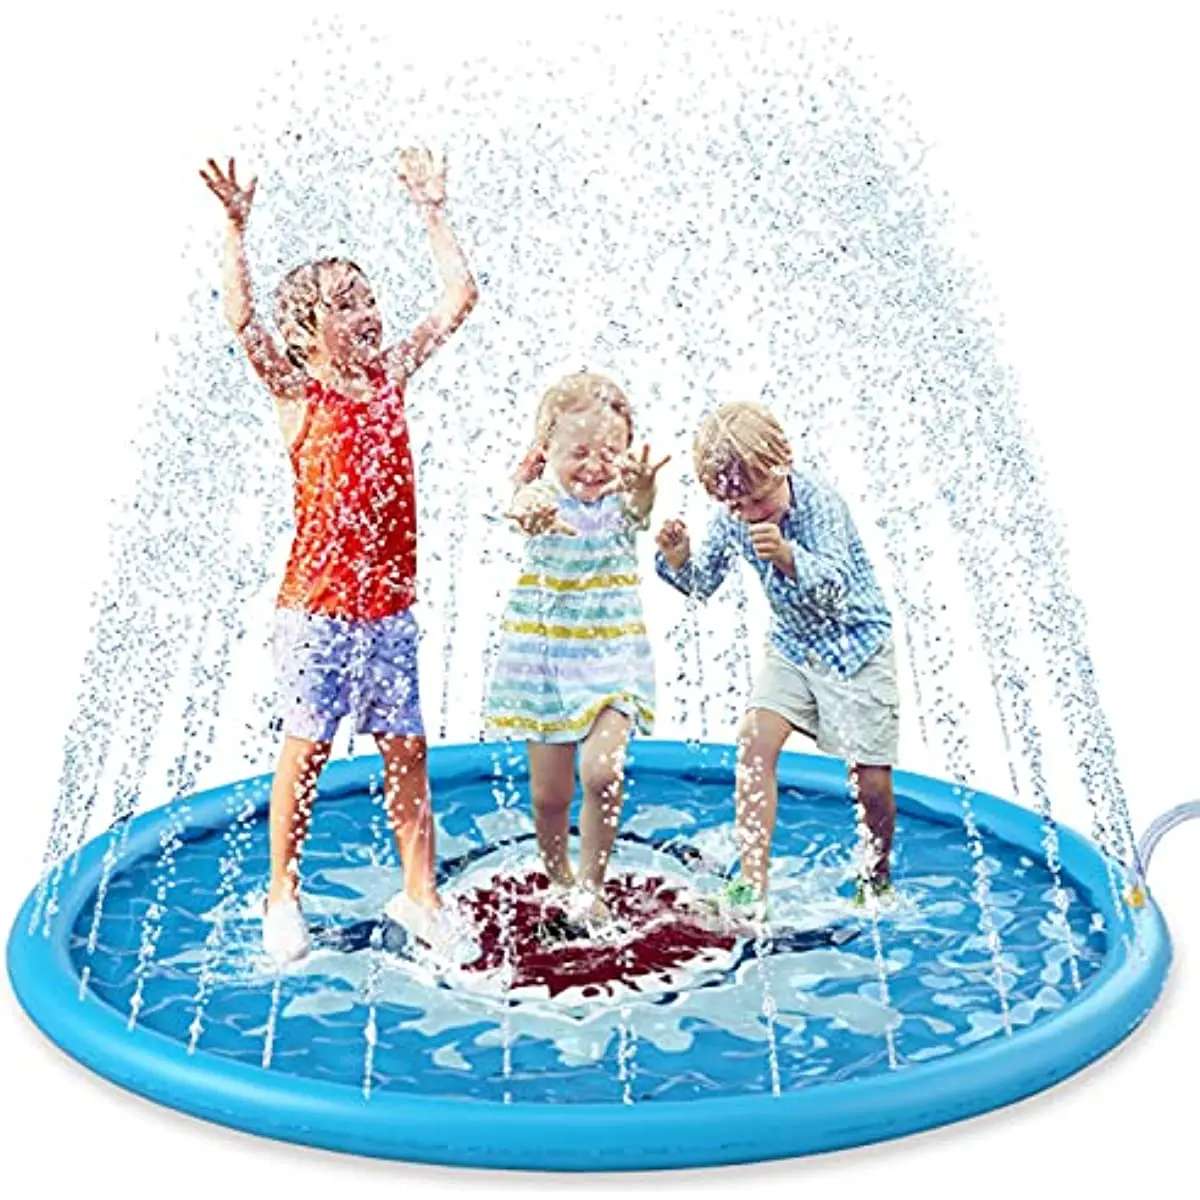  splash pad sprinkler for kids splash play mat outdoor water toys inflatable splash pad thumb200